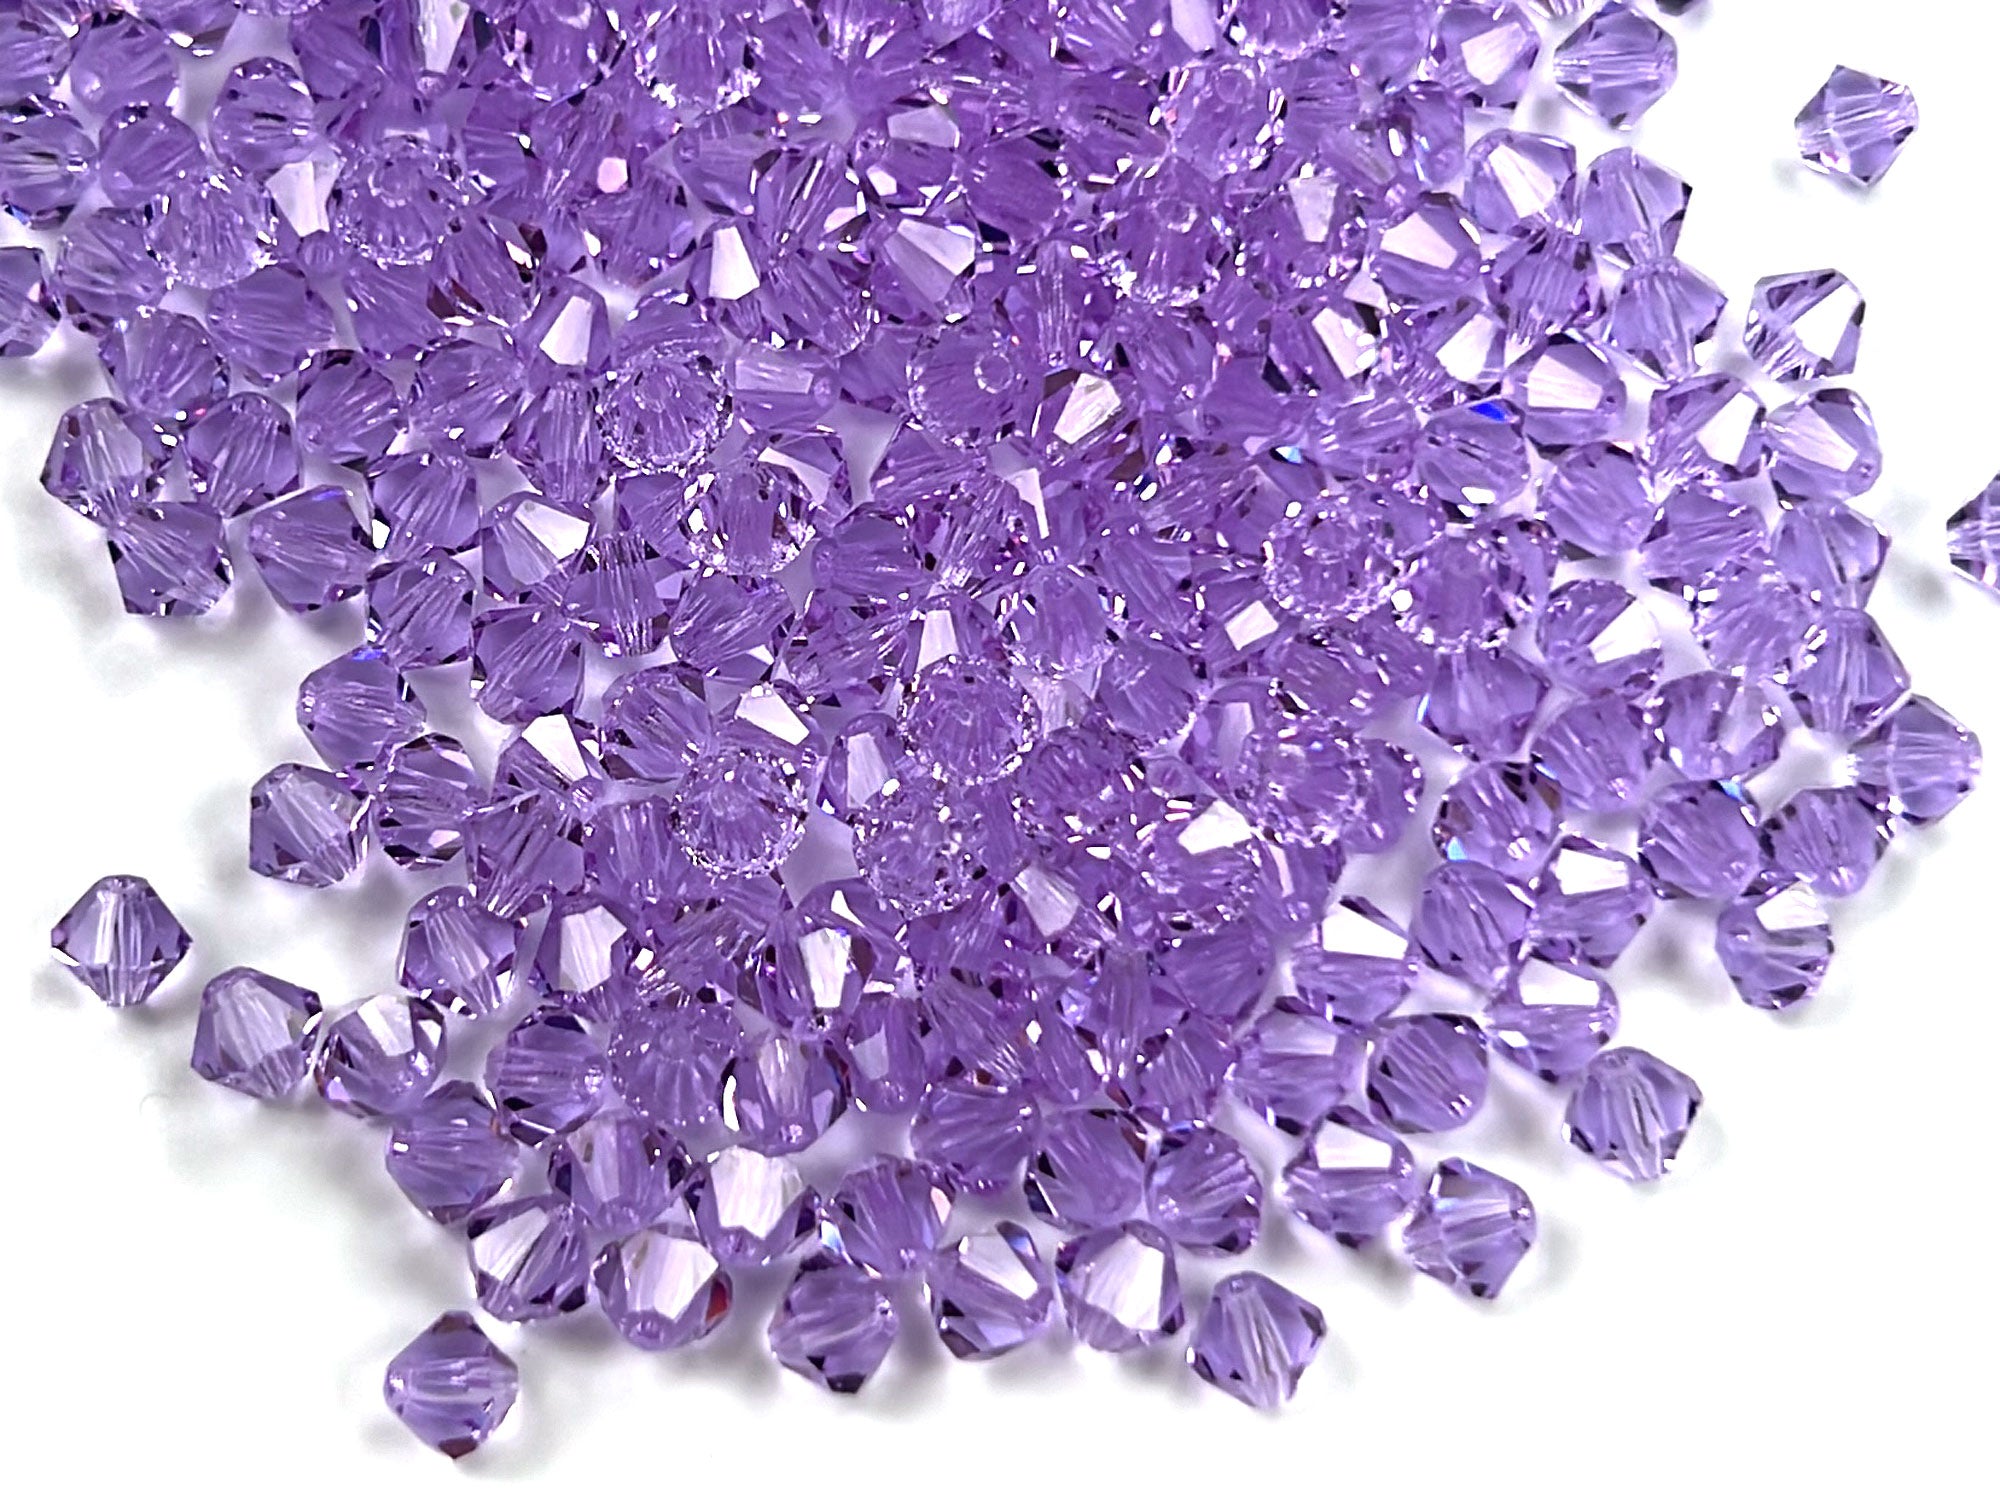 Violet Czech Glass Beads Machine Cut Bicones (MC Rondell Diamond Shape) transparent rich purple crystals 3mm 4mm 5mm 6mm 8mm